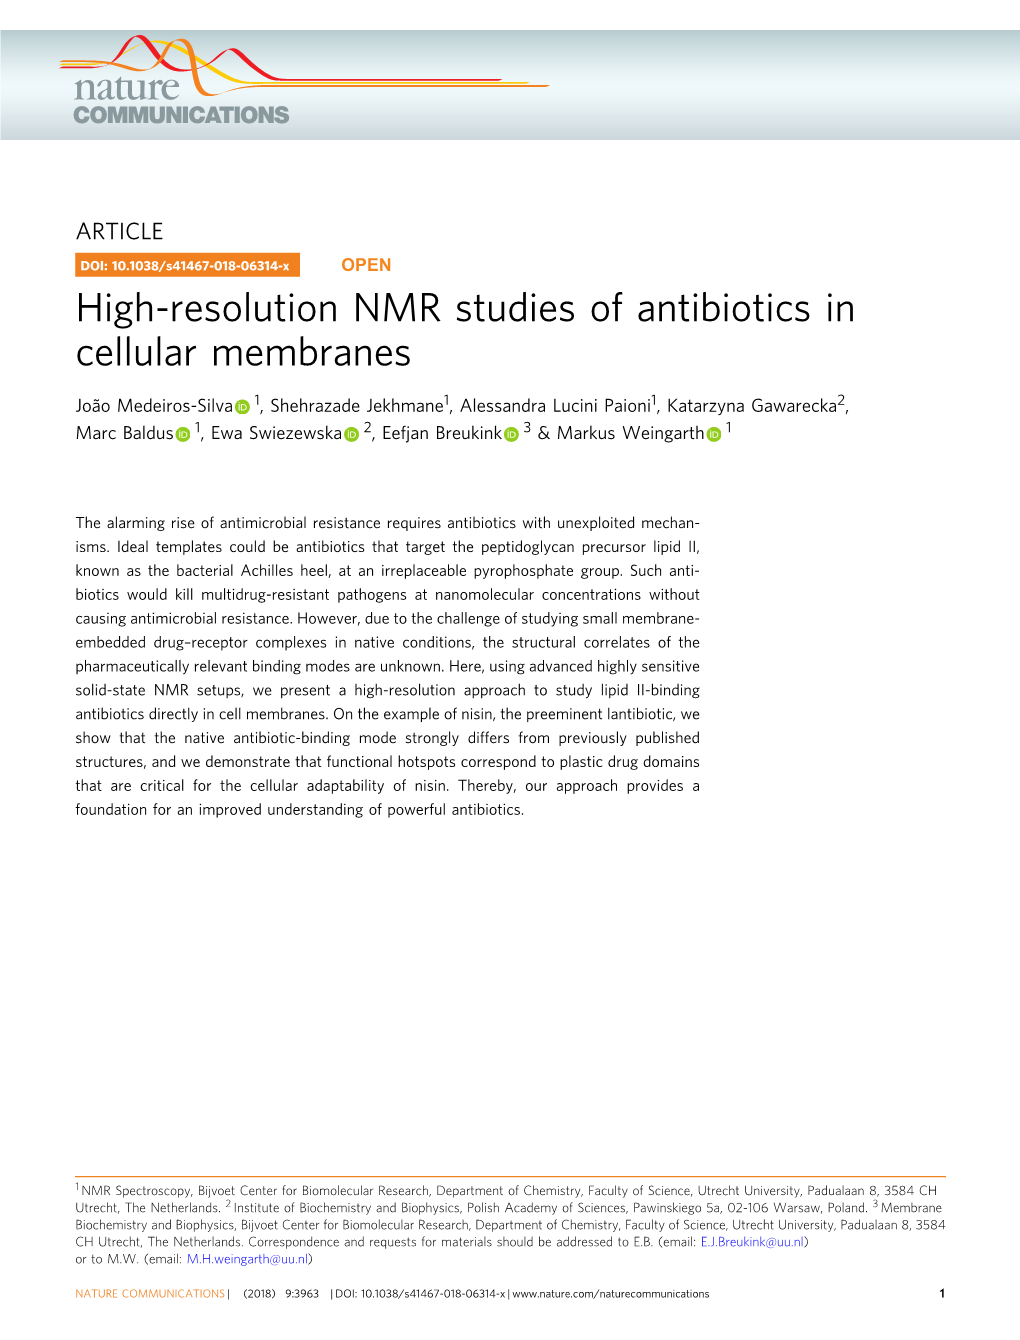 High-Resolution NMR Studies of Antibiotics in Cellular Membranes